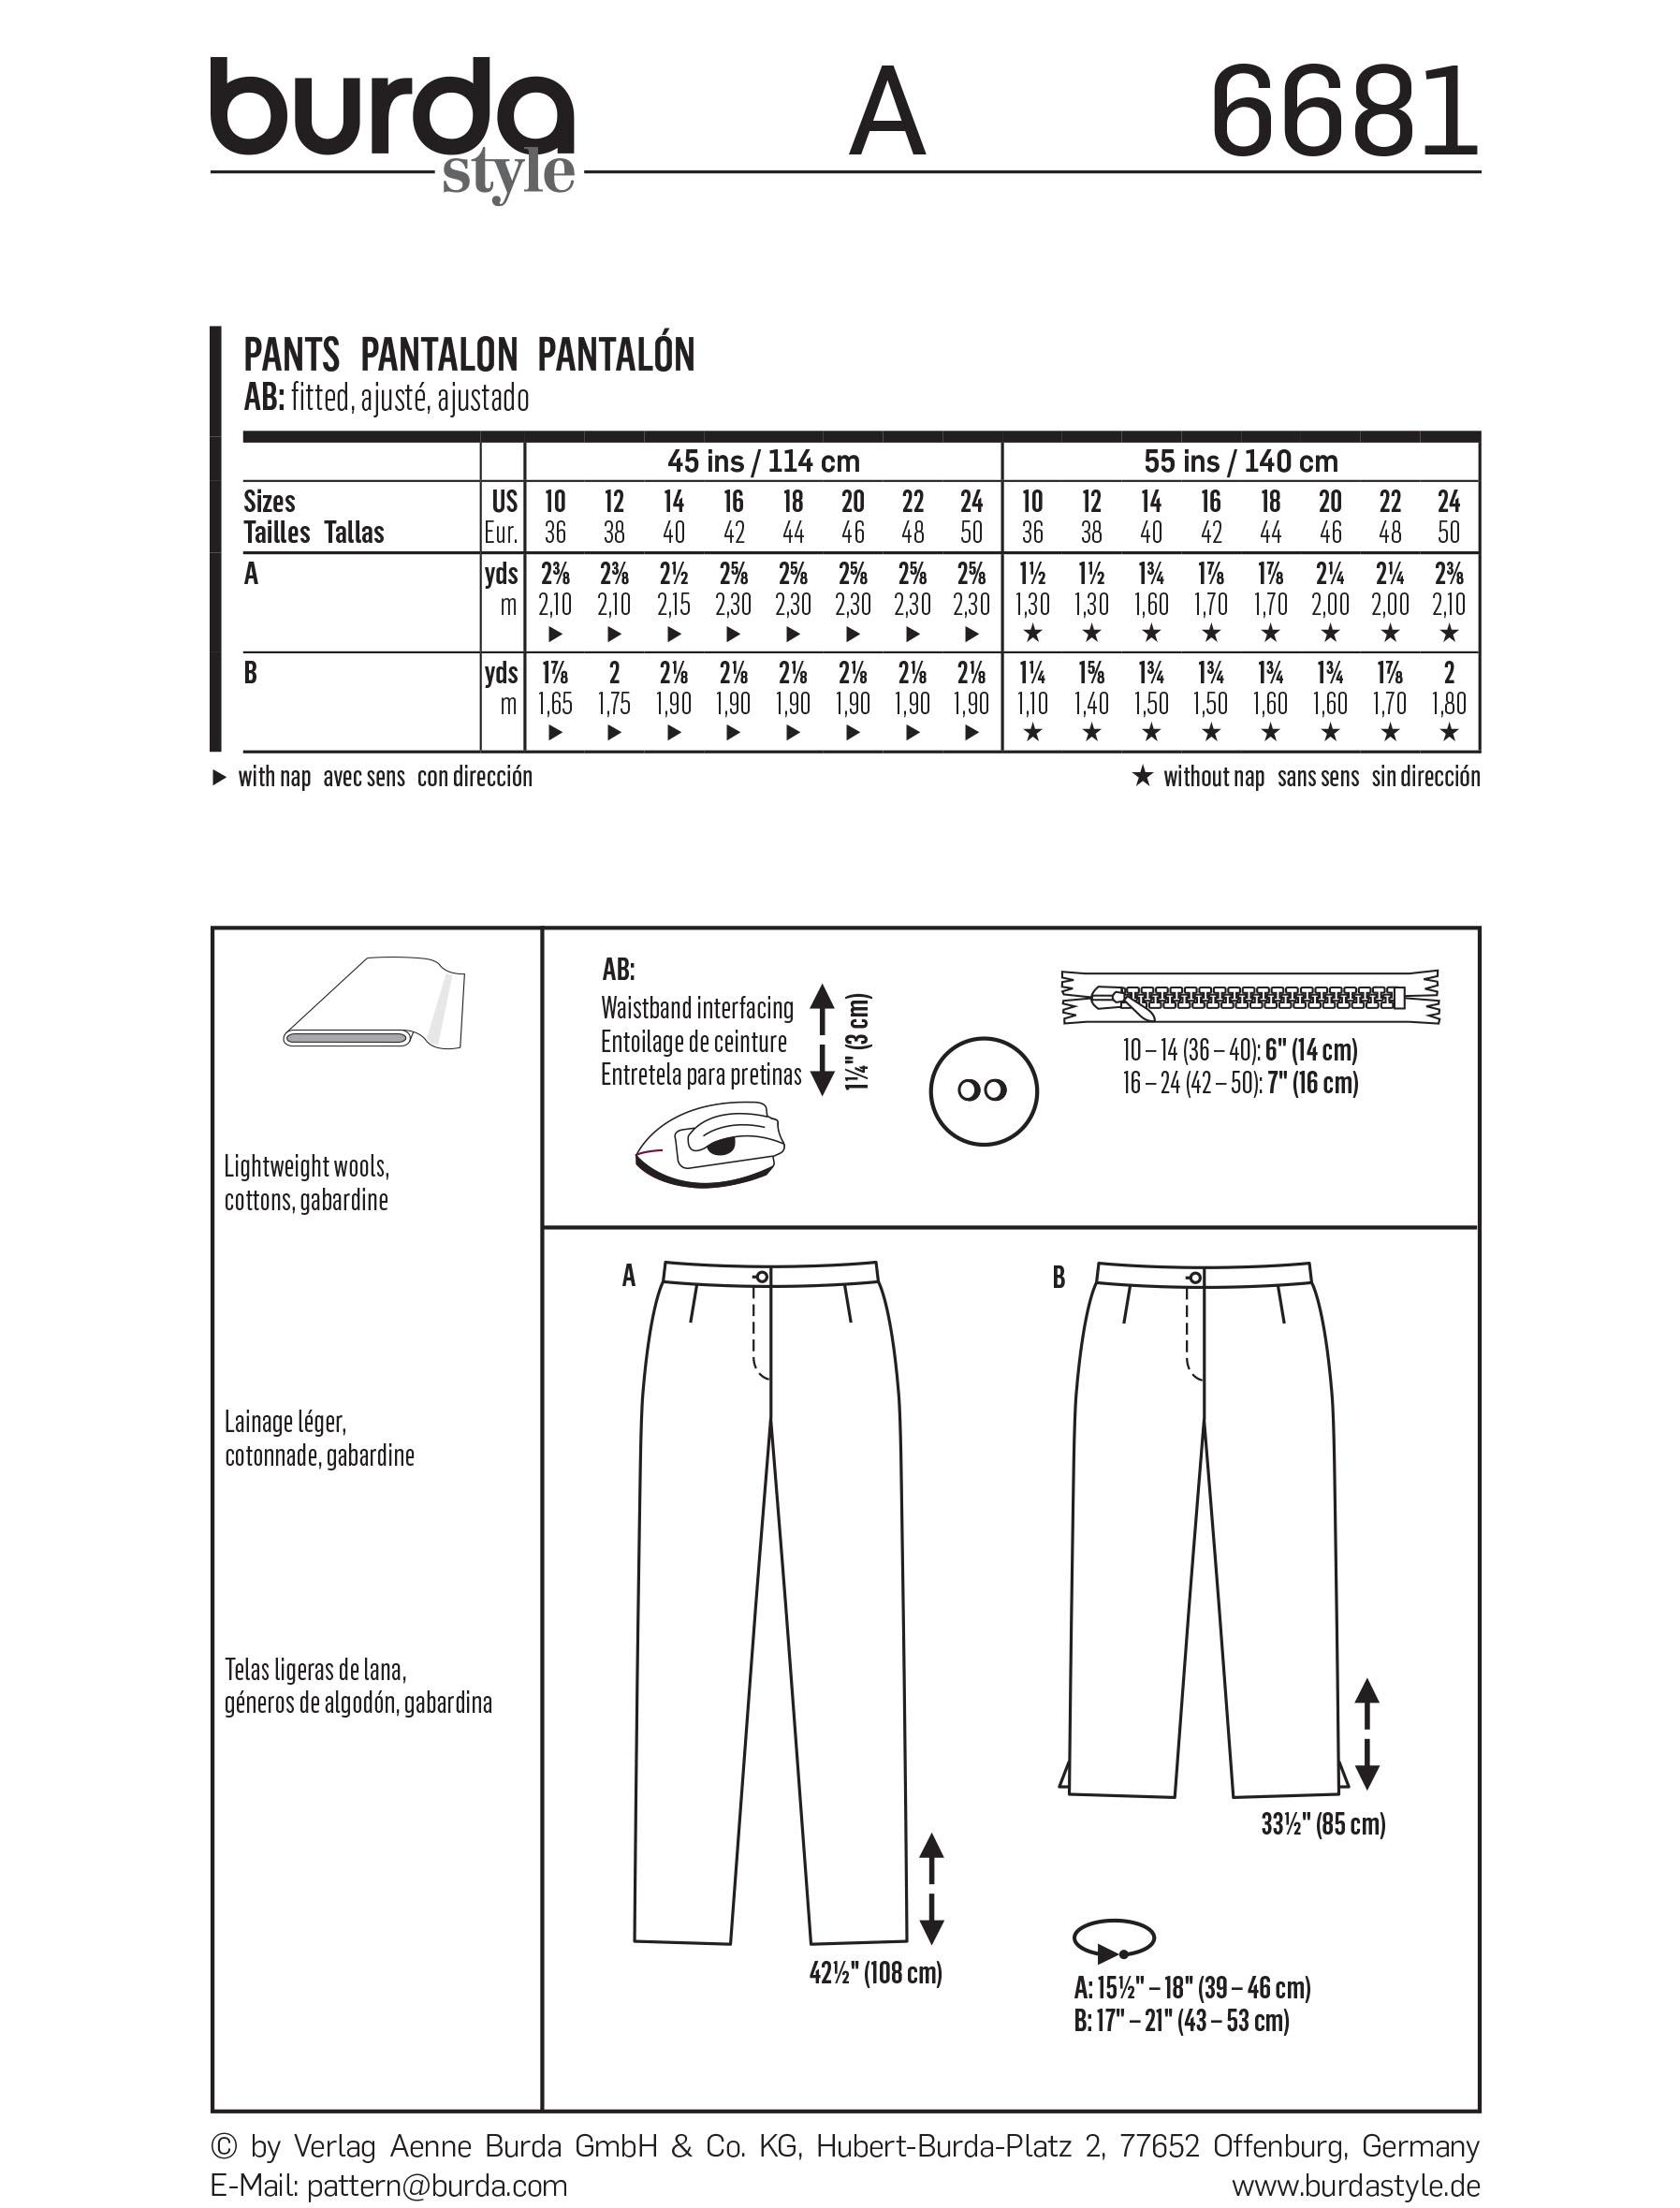 Burda B6681 Women's Trousers Sewing Pattern